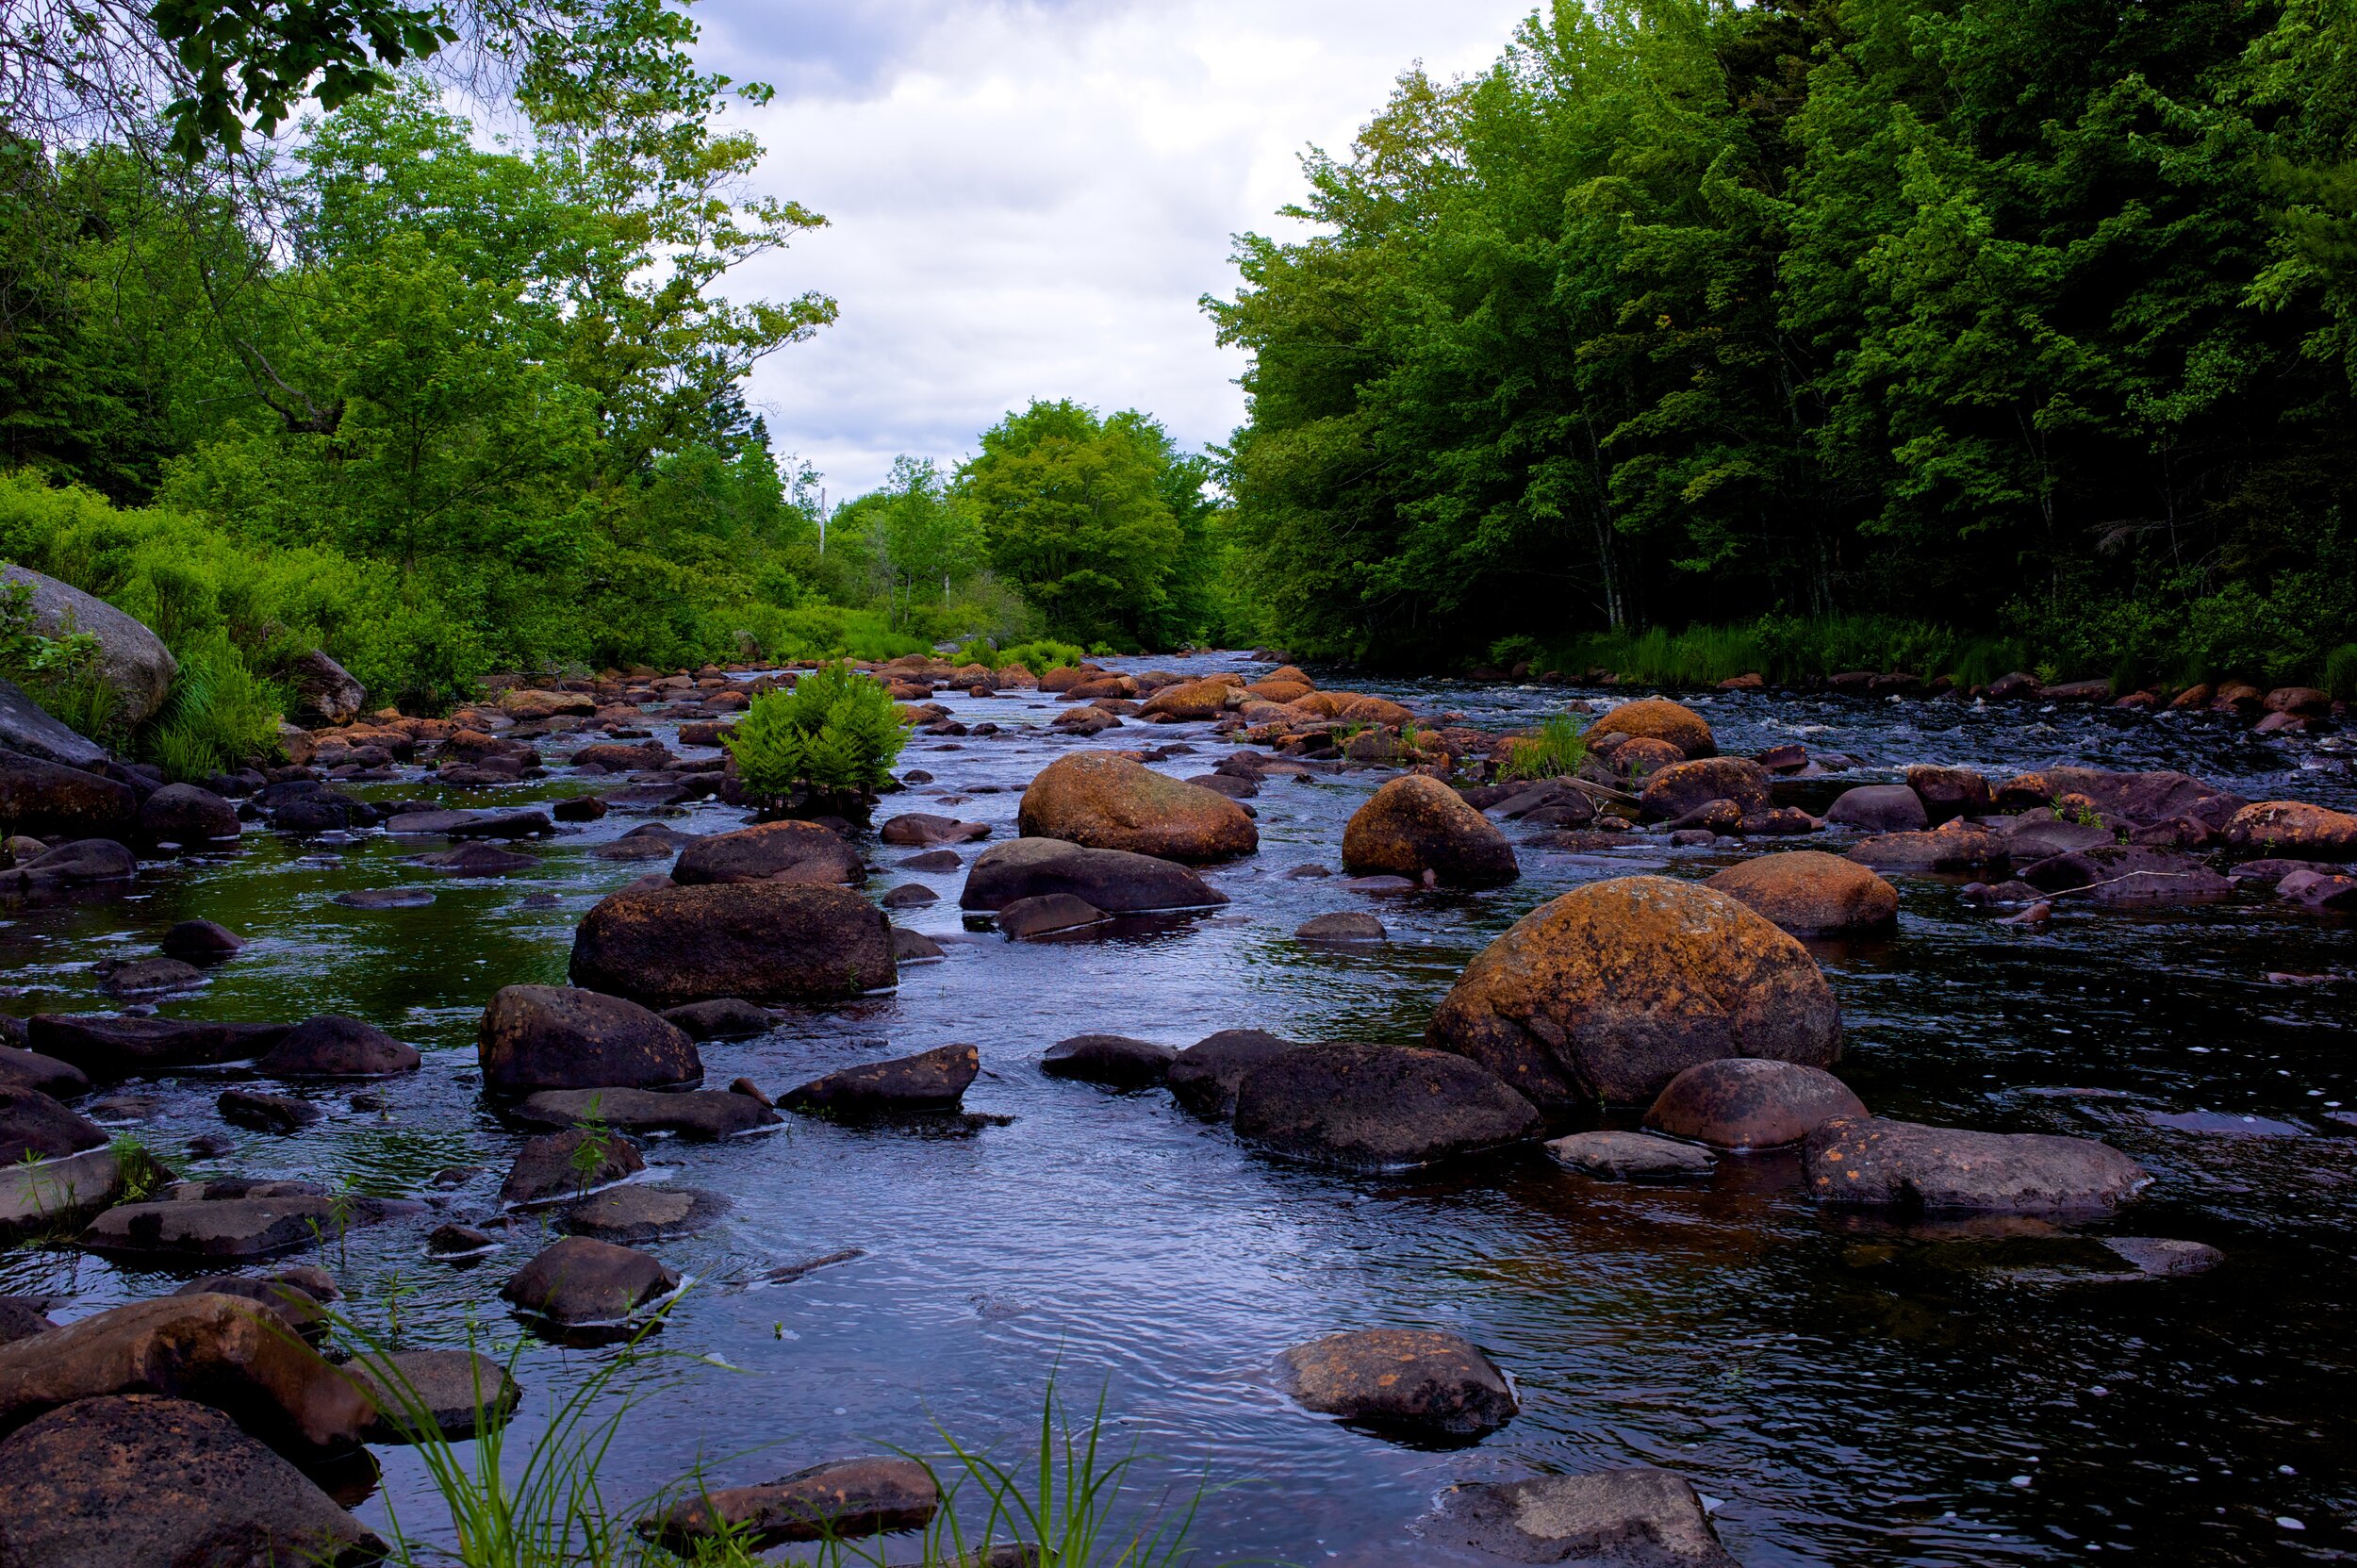 Petite River, near Crousetown, Nova Scotia